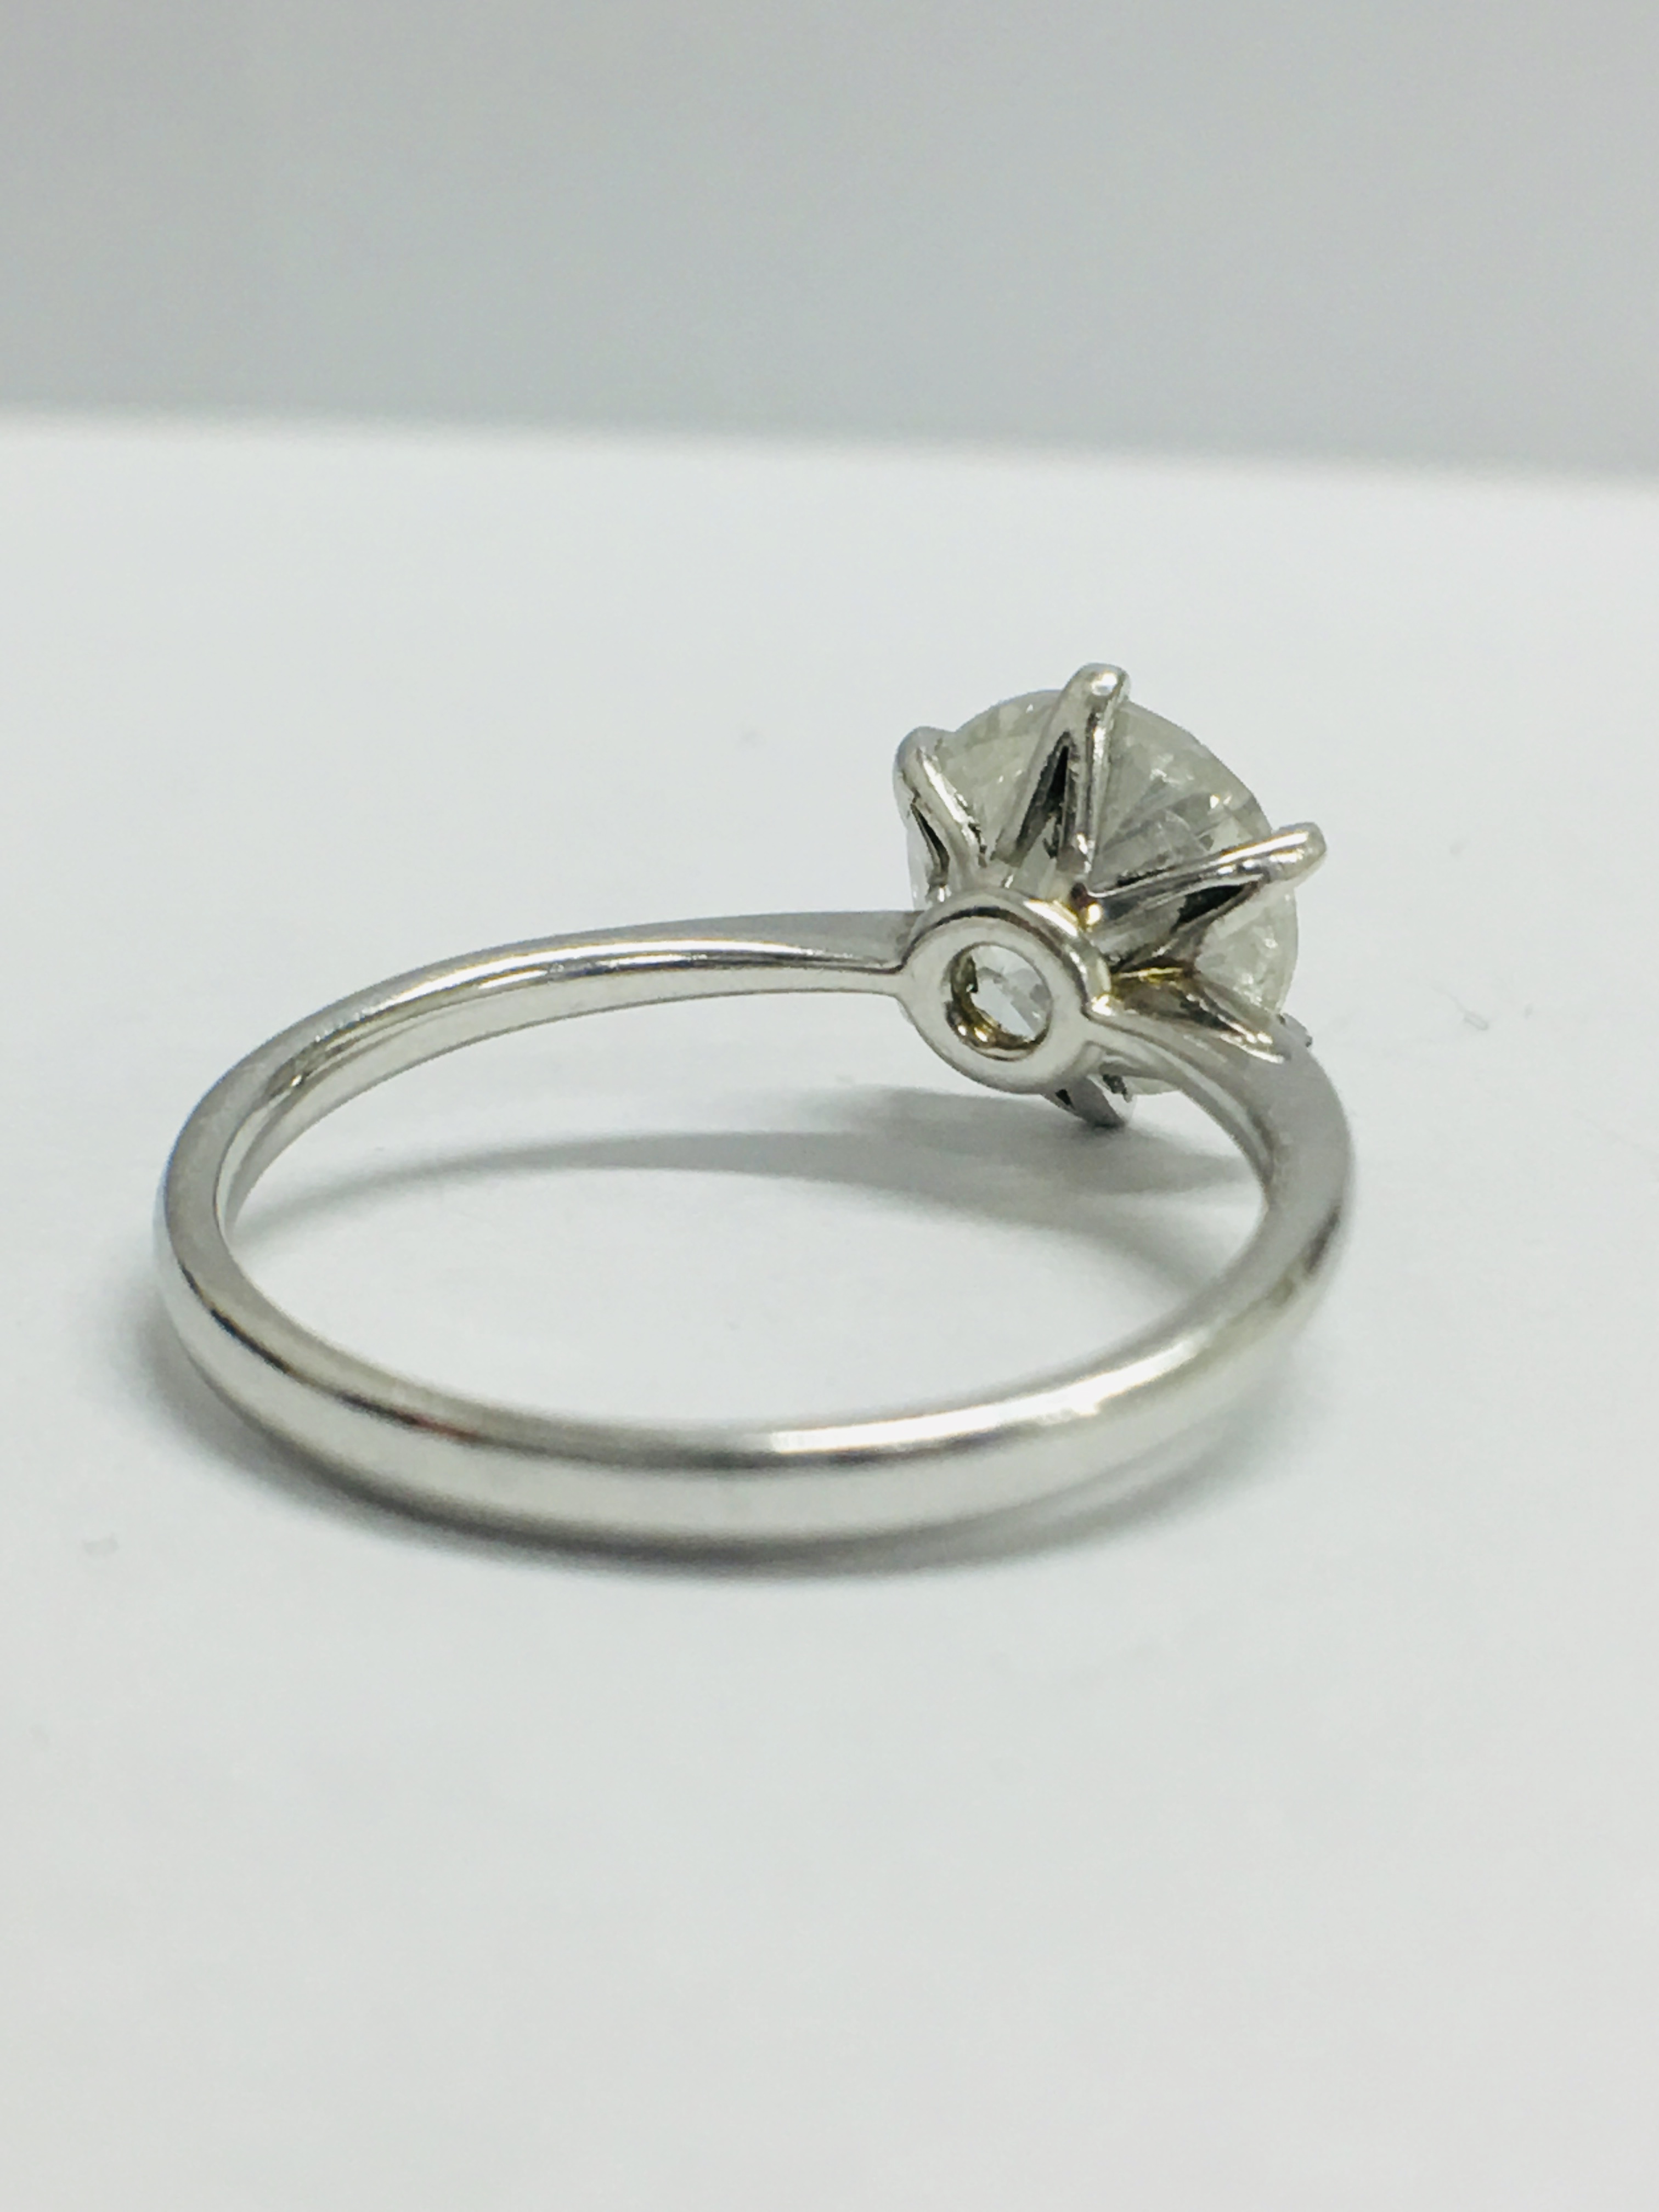 1.80ct diamond solitaire ring set in Platinum setting - Image 6 of 10